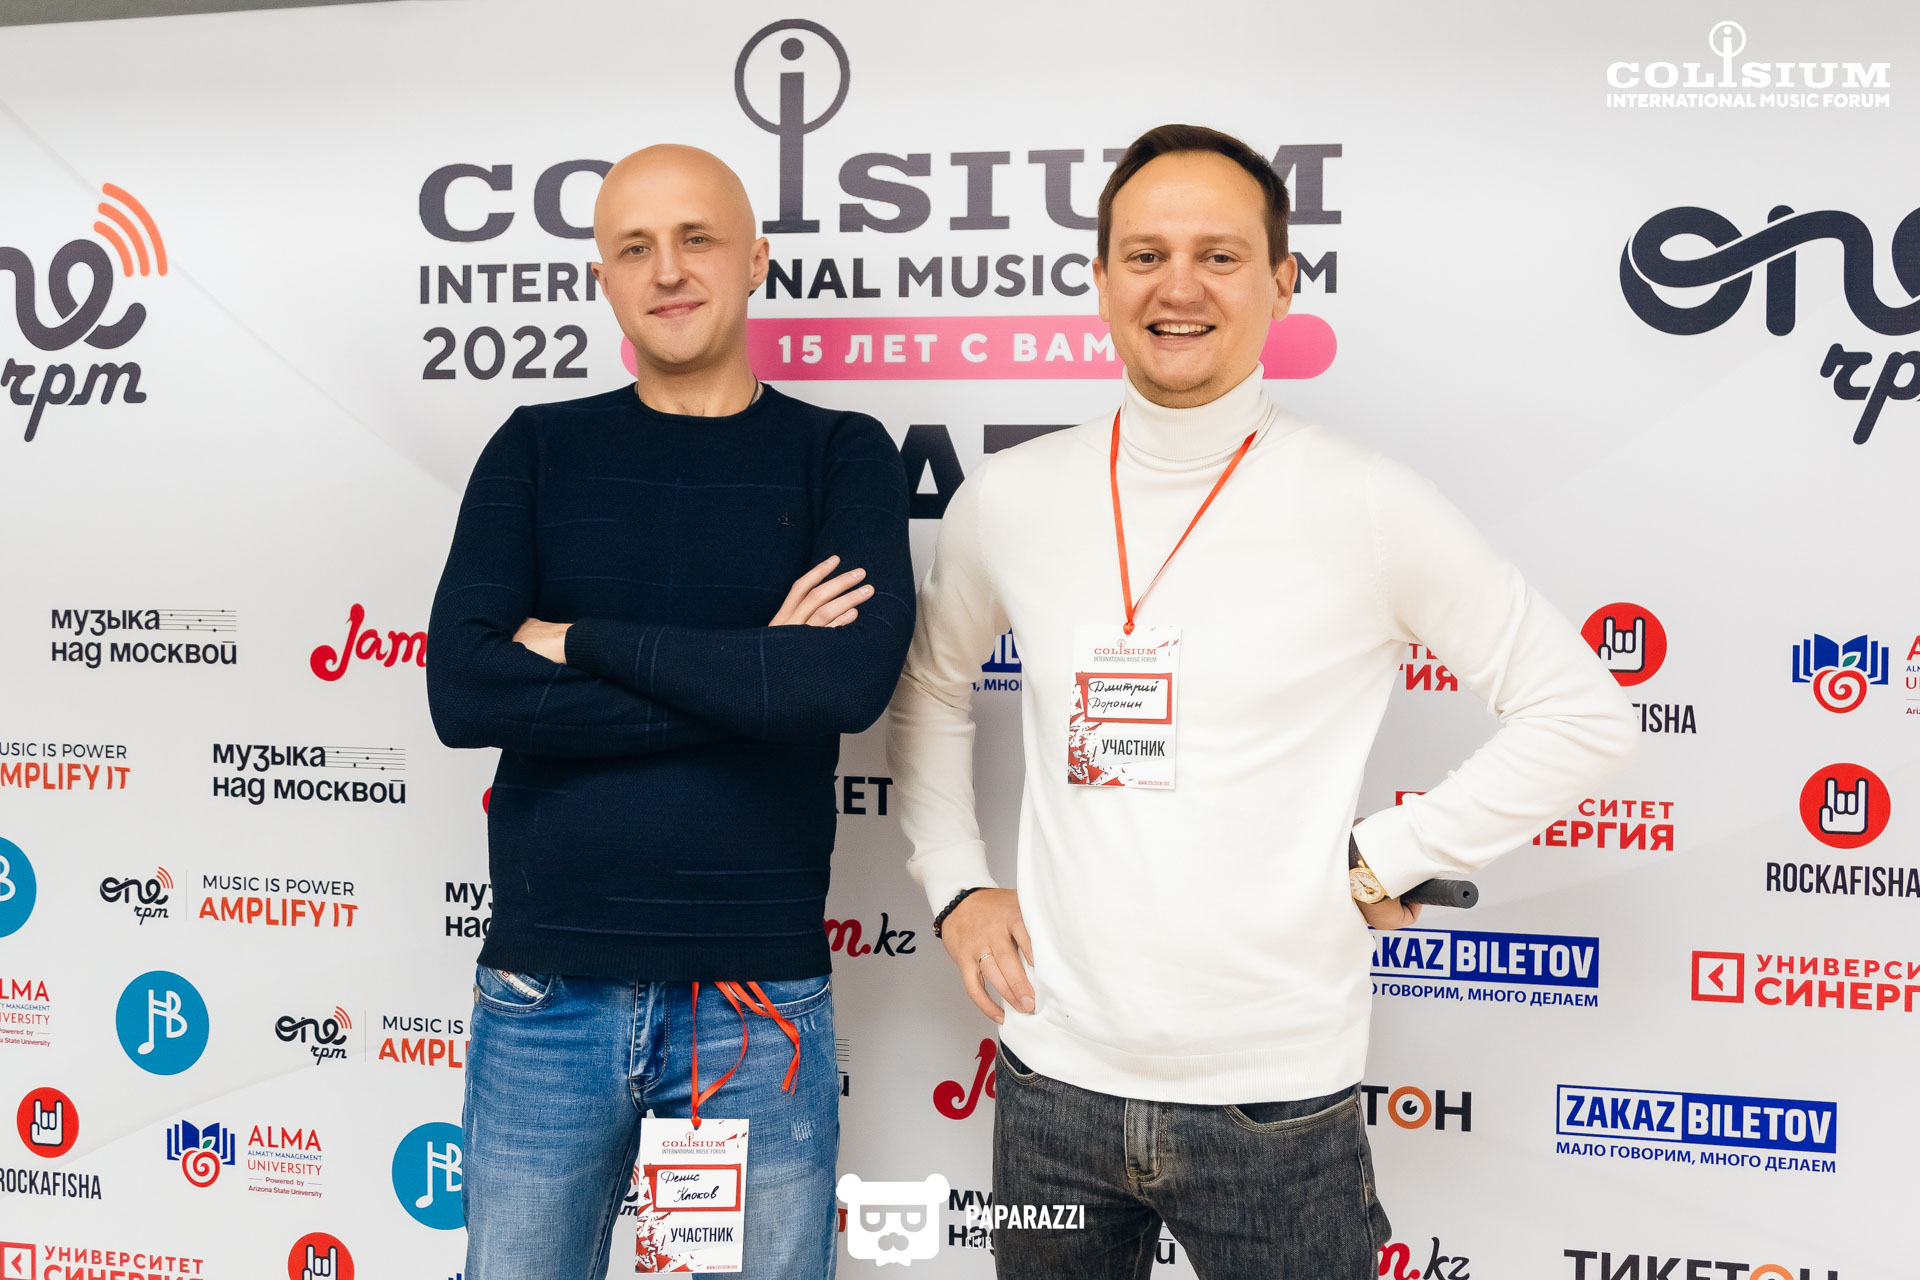 COLISIUM International Music Forum 2022